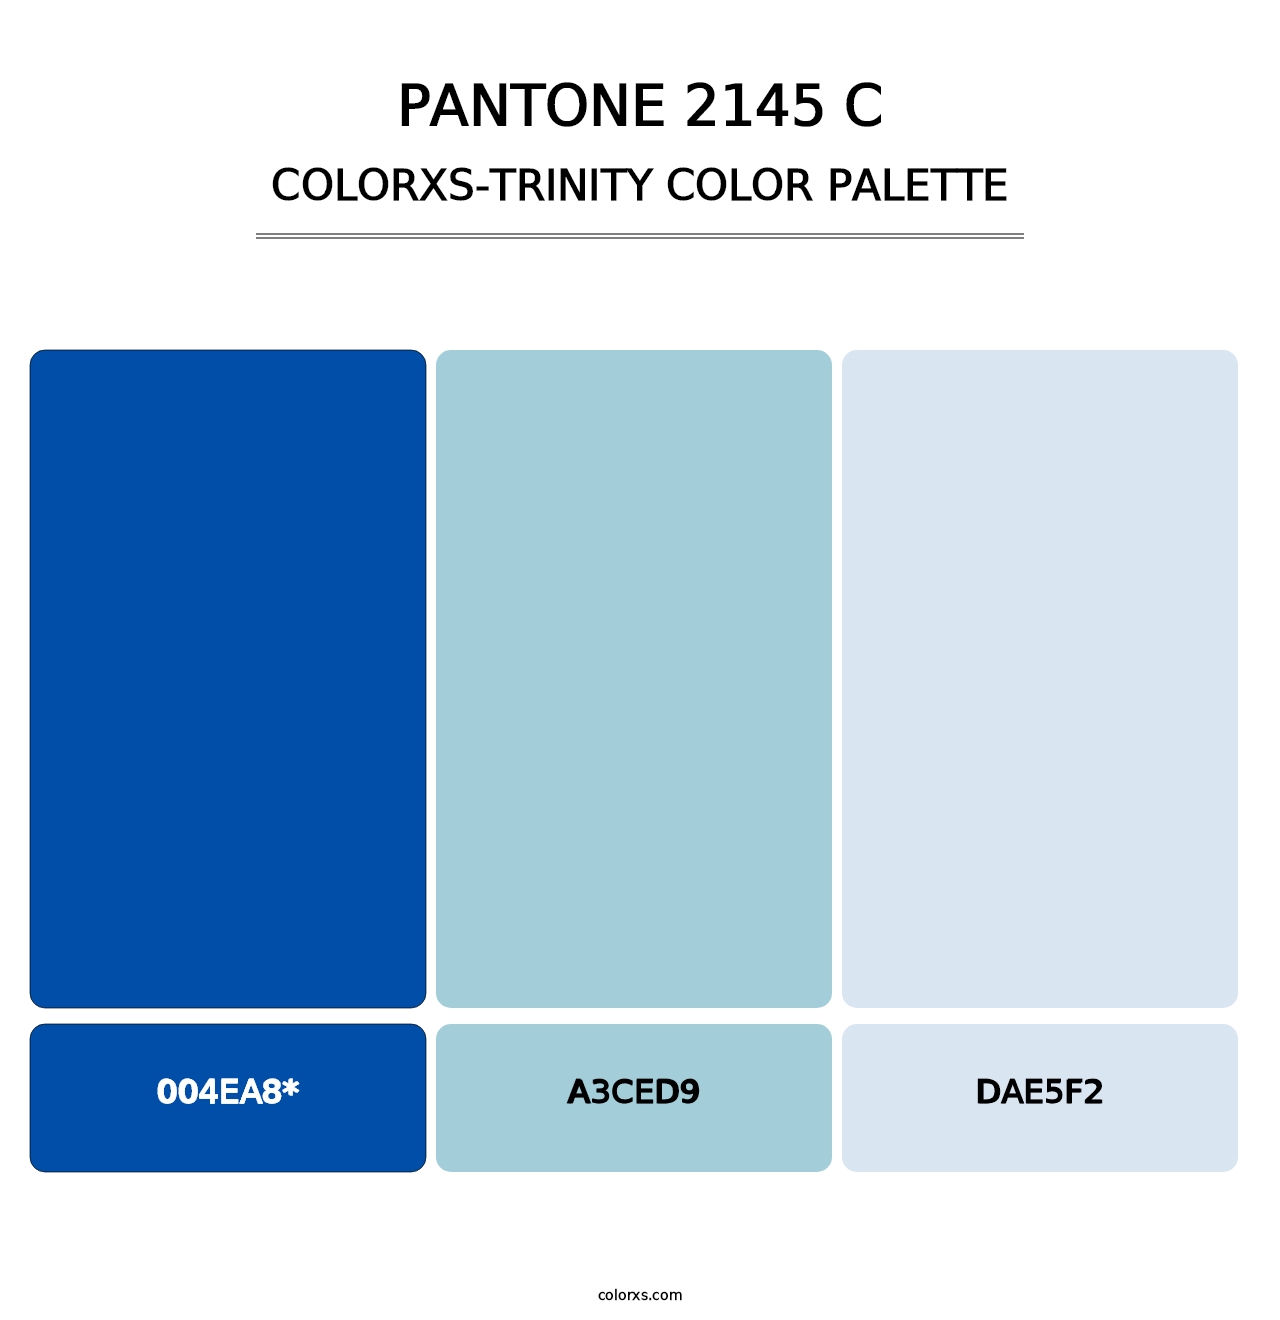 PANTONE 2145 C - Colorxs Trinity Palette